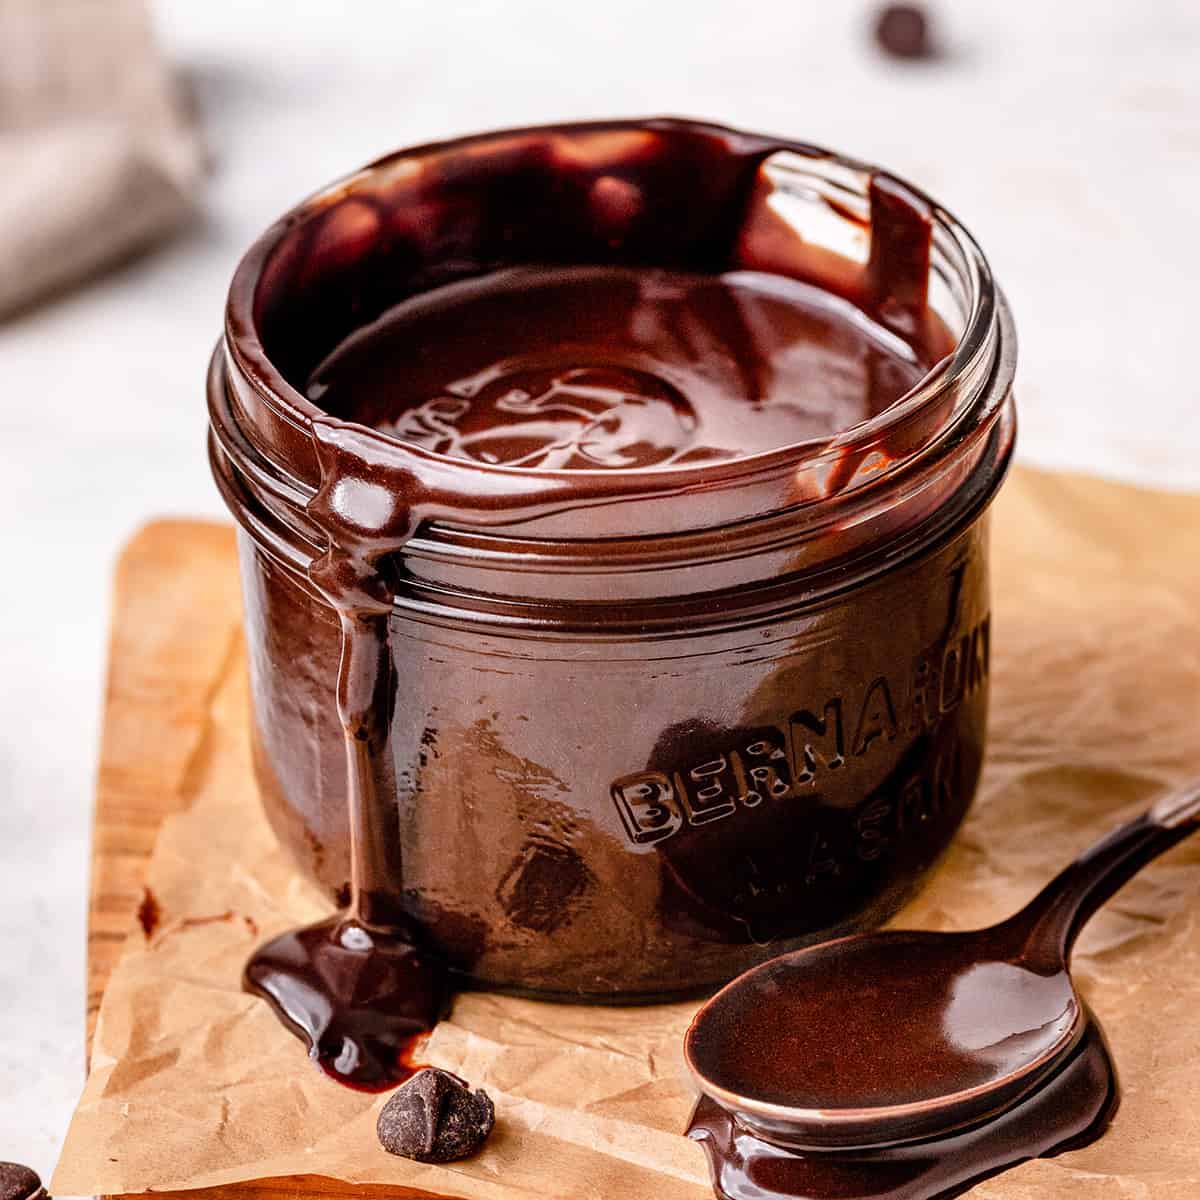 a glass jar of homemade chocolate sauce